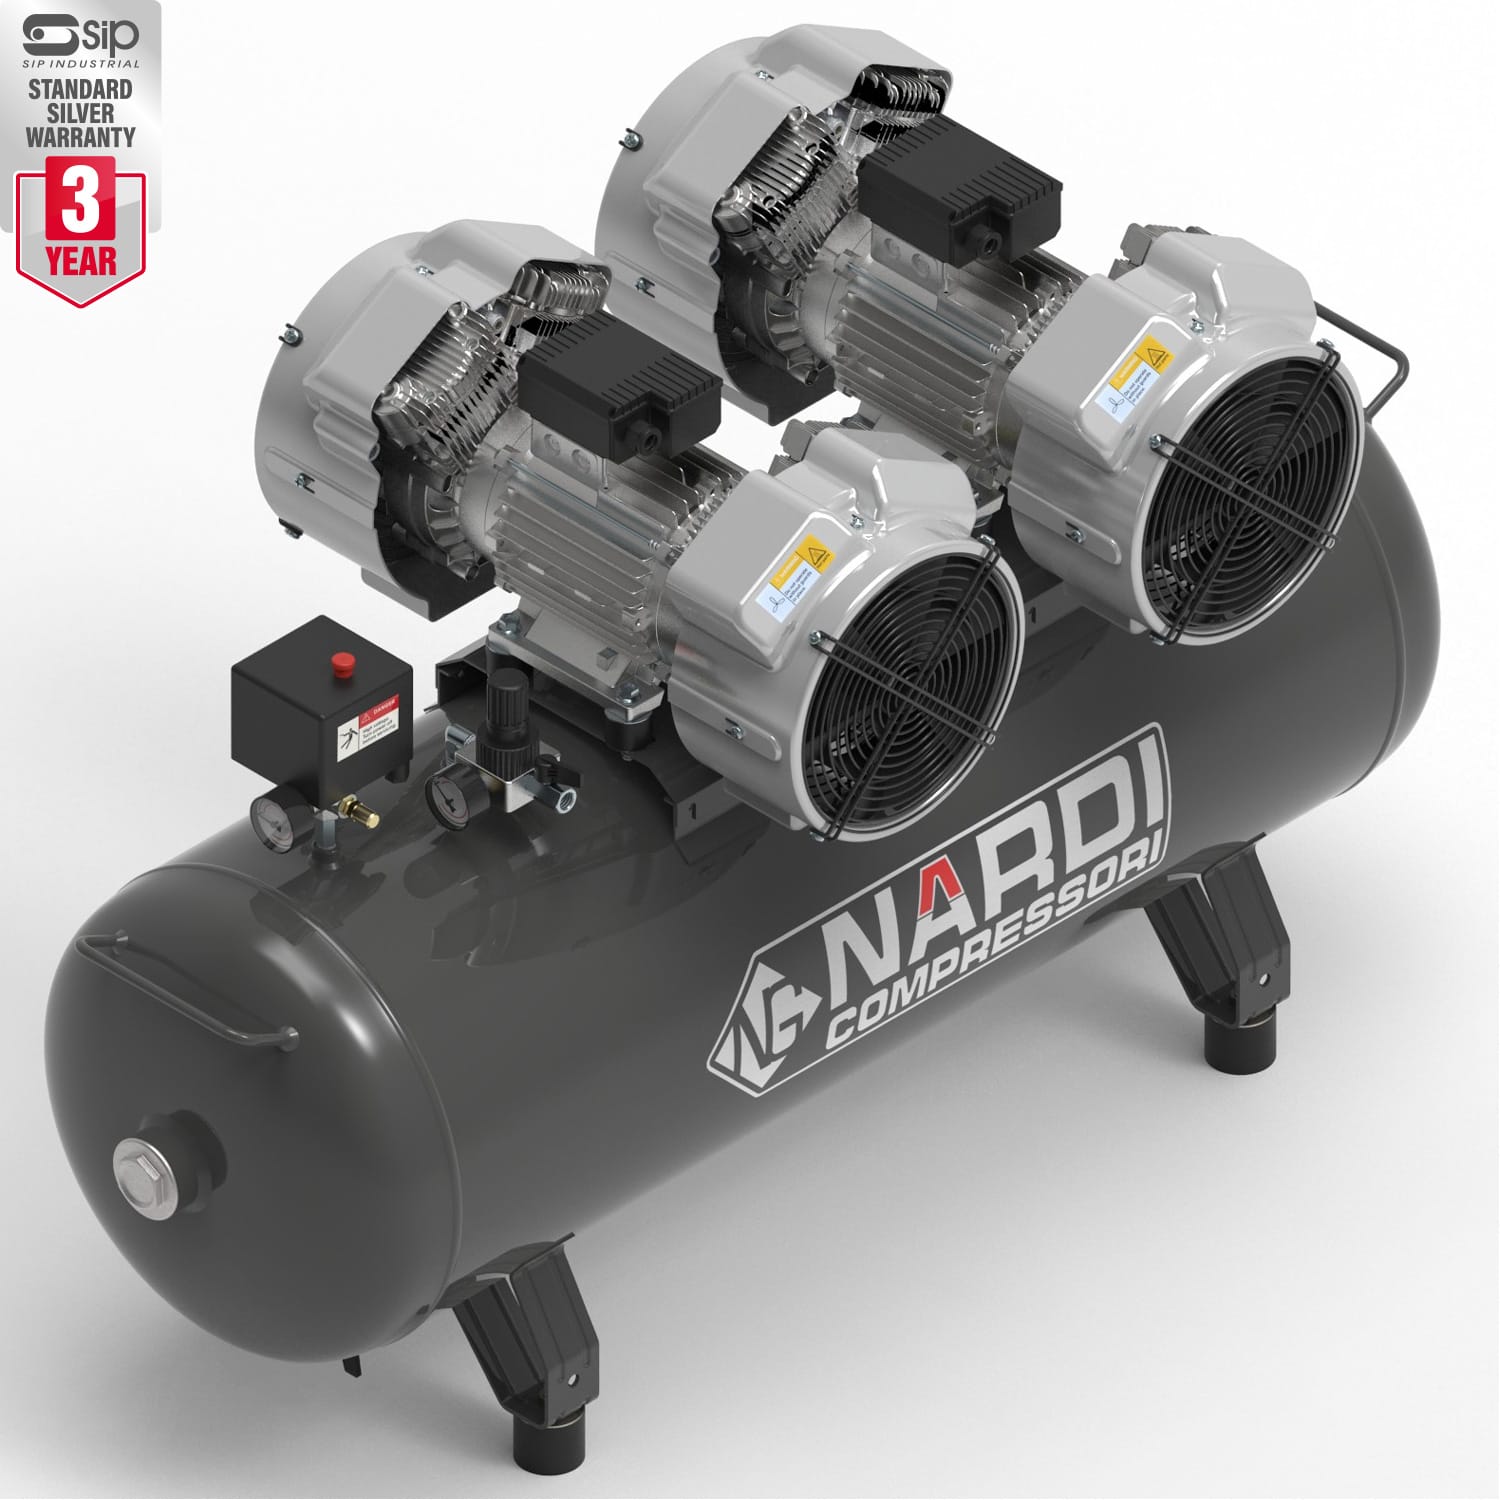 NARDI EXTREME MP 6.00HP 200ltr Compressor | EXTMP20060